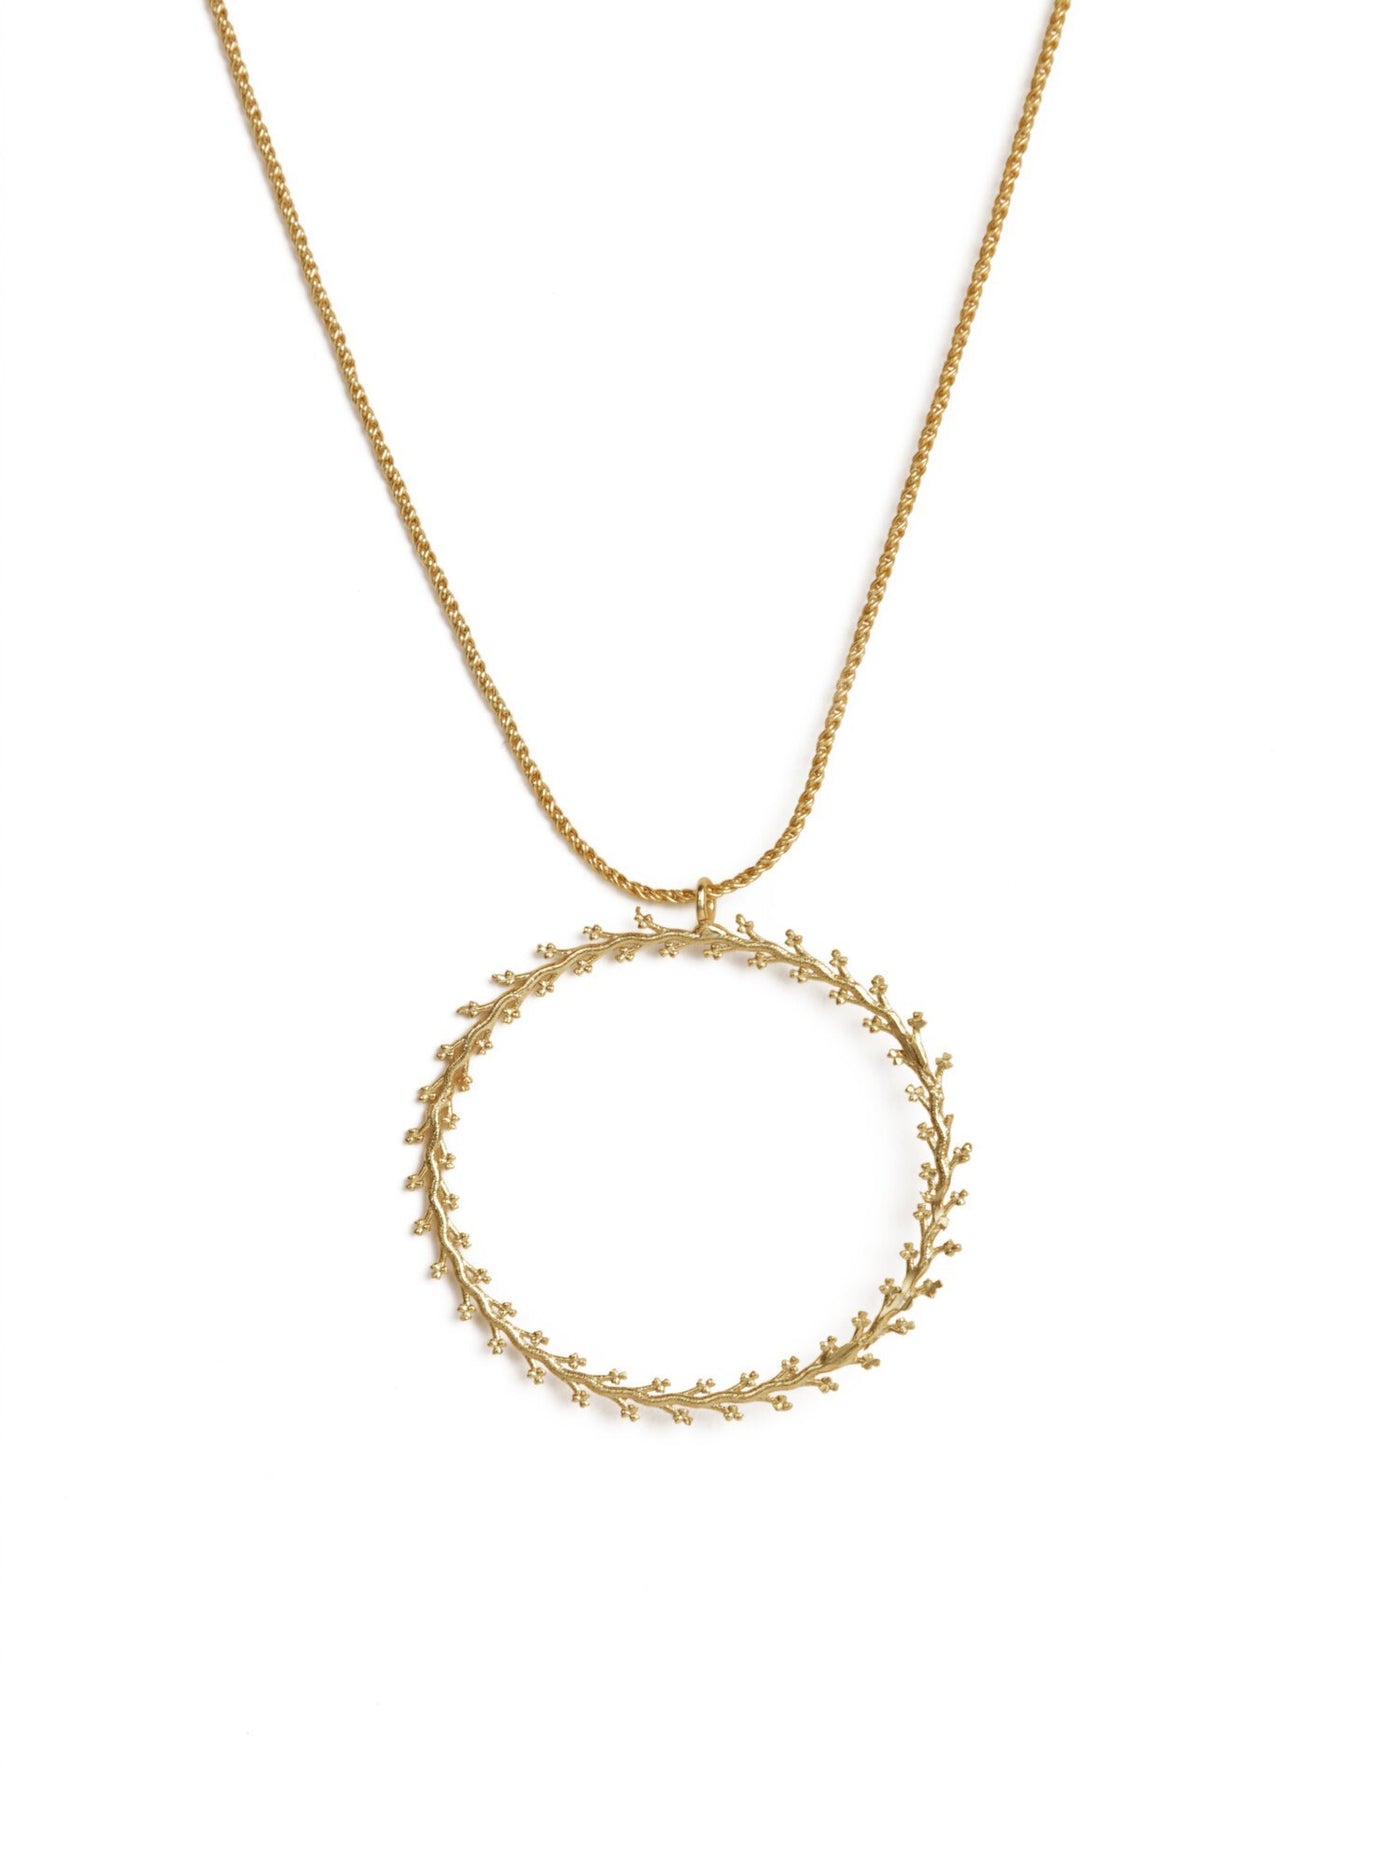 Jaw Drop Pendant Gold Necklace - Stilskii